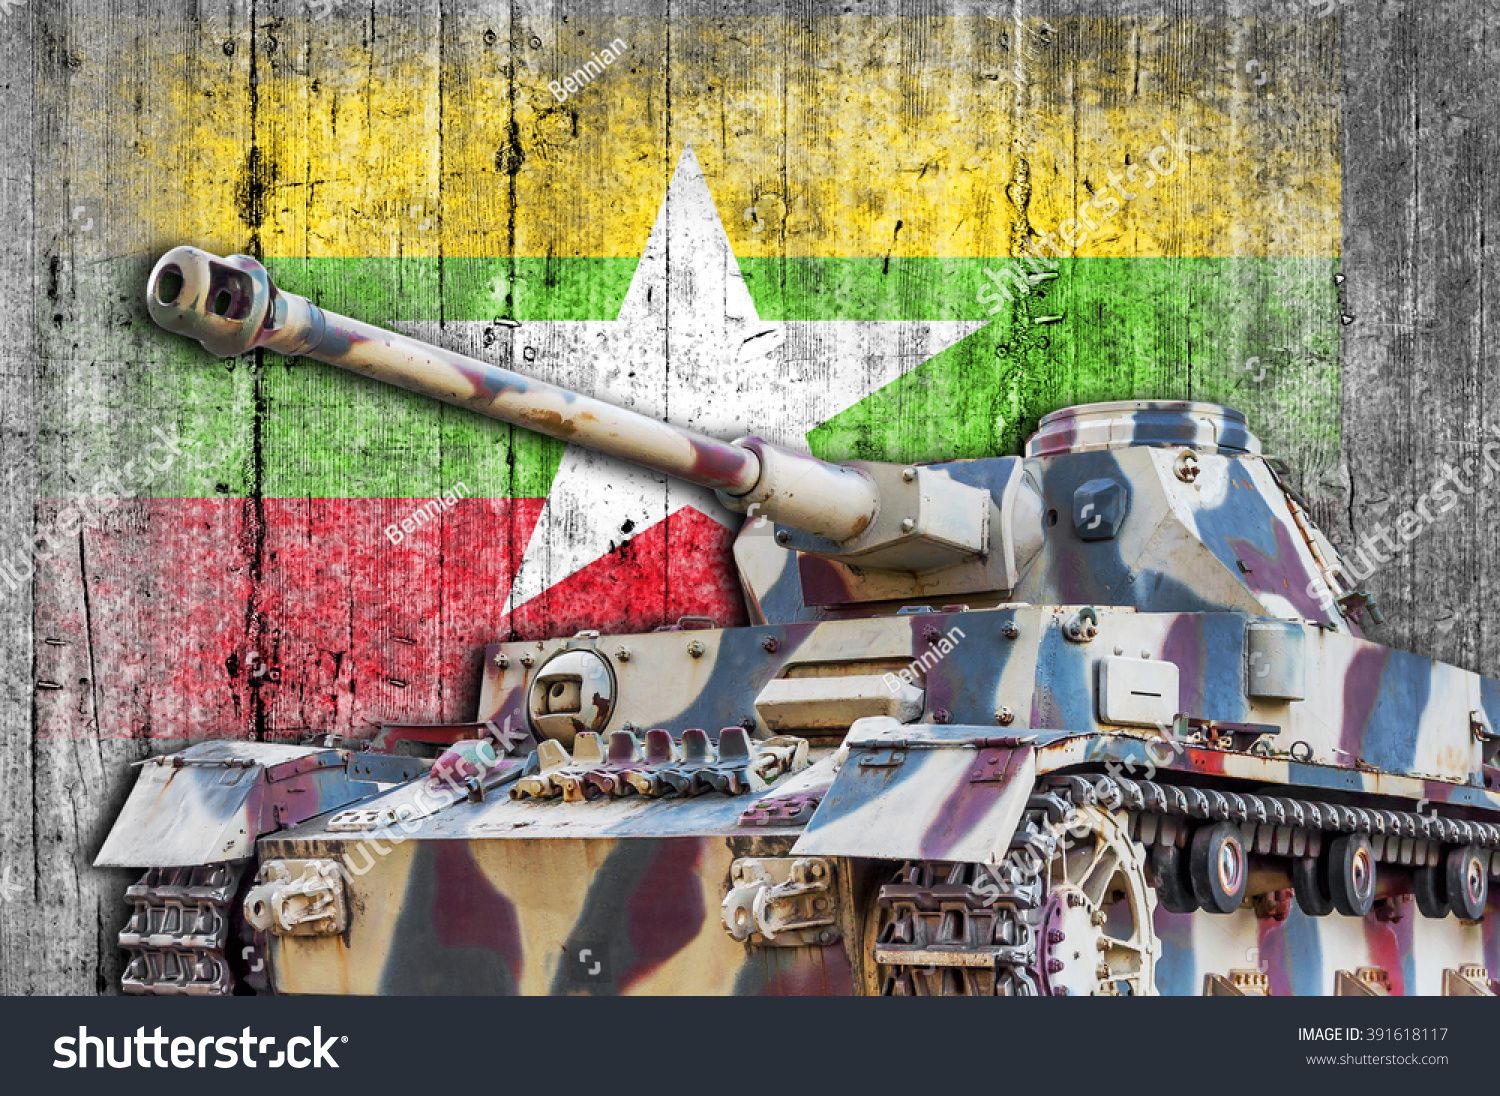 Image result for myanmar mandalay army tank